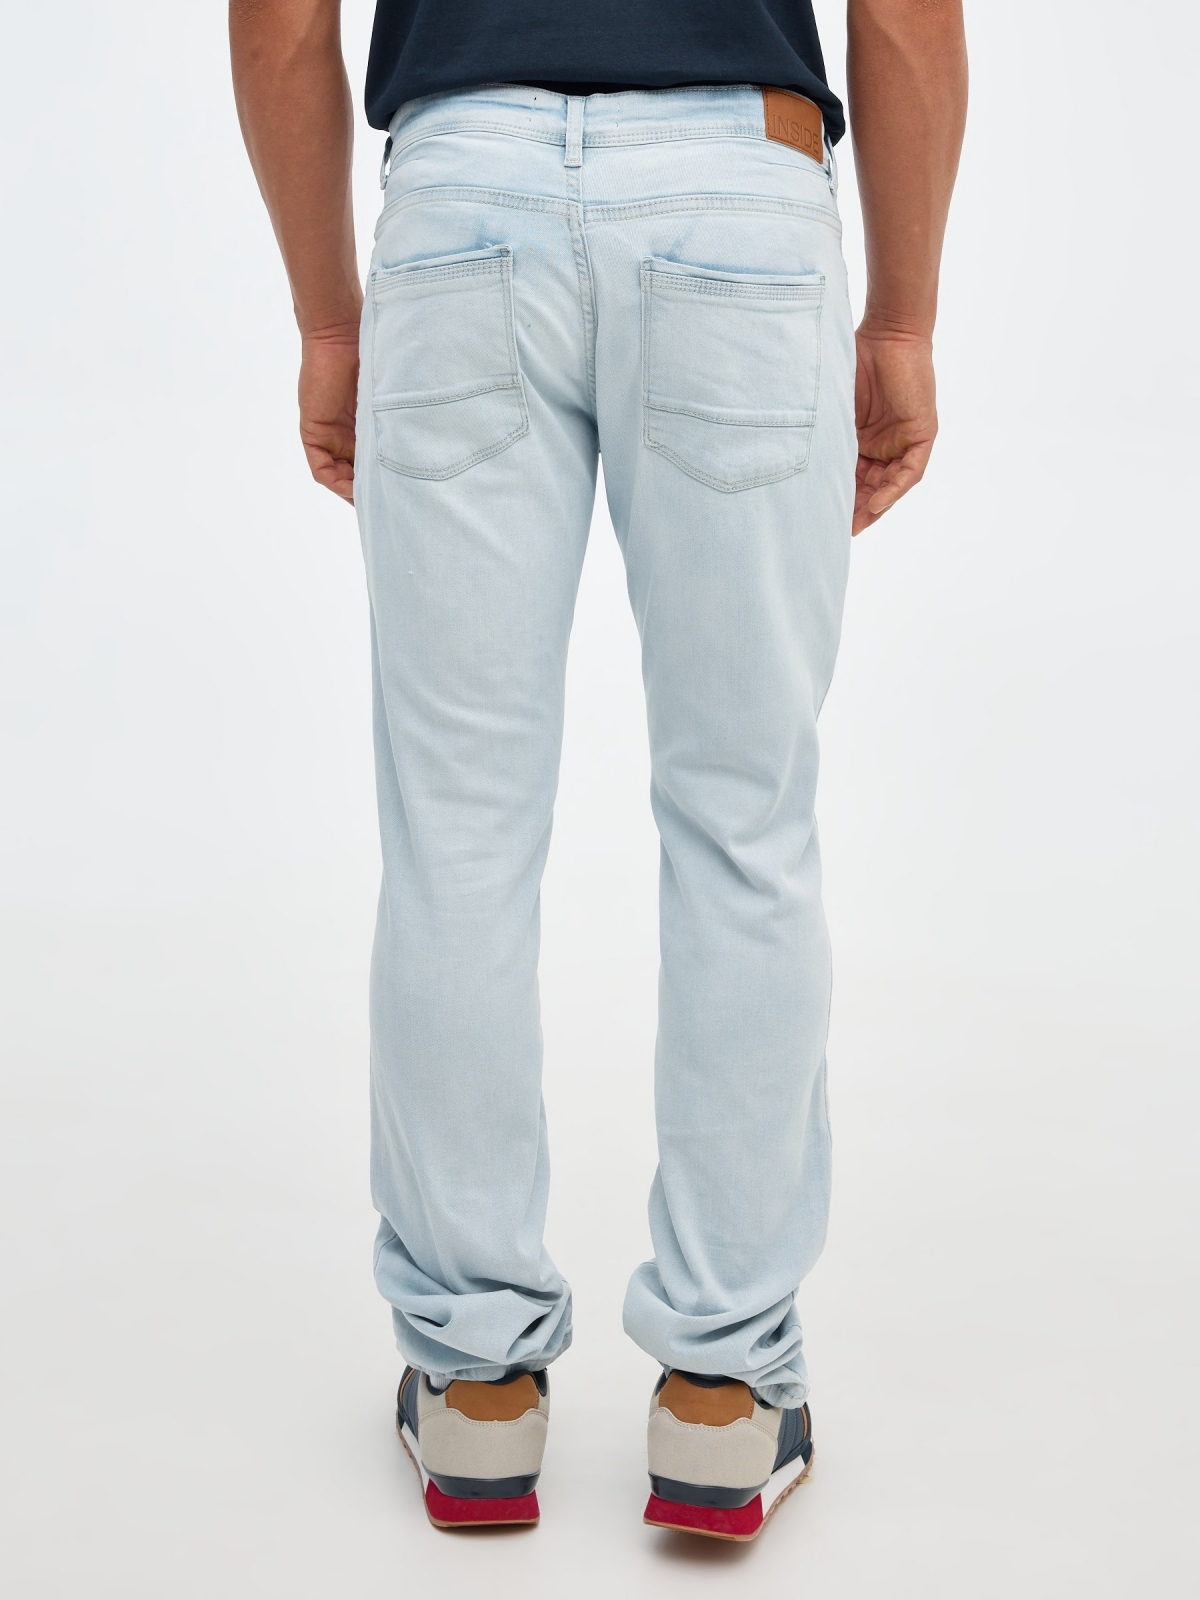 Blue denim regular jeans blue front view